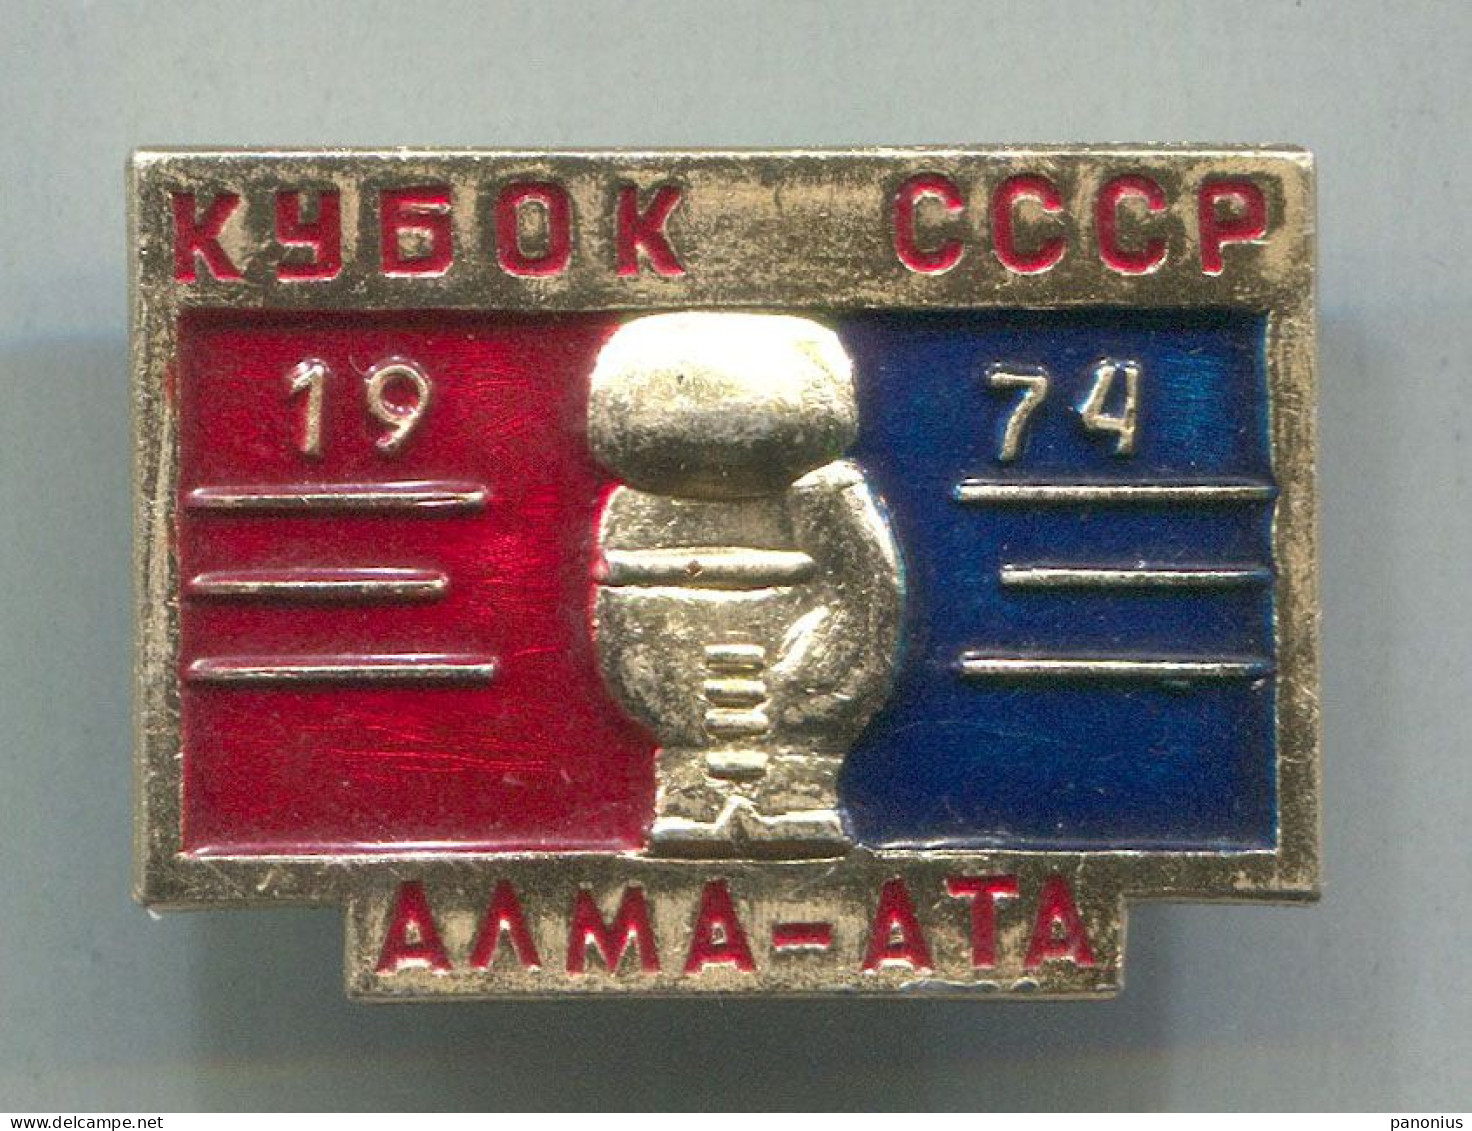 Boxing Box Boxen Pugilato - Alma - Ata Kazakhstan 1974. USSR Russia, Vintage  Pin  Badge  Abzeichen - Boxe